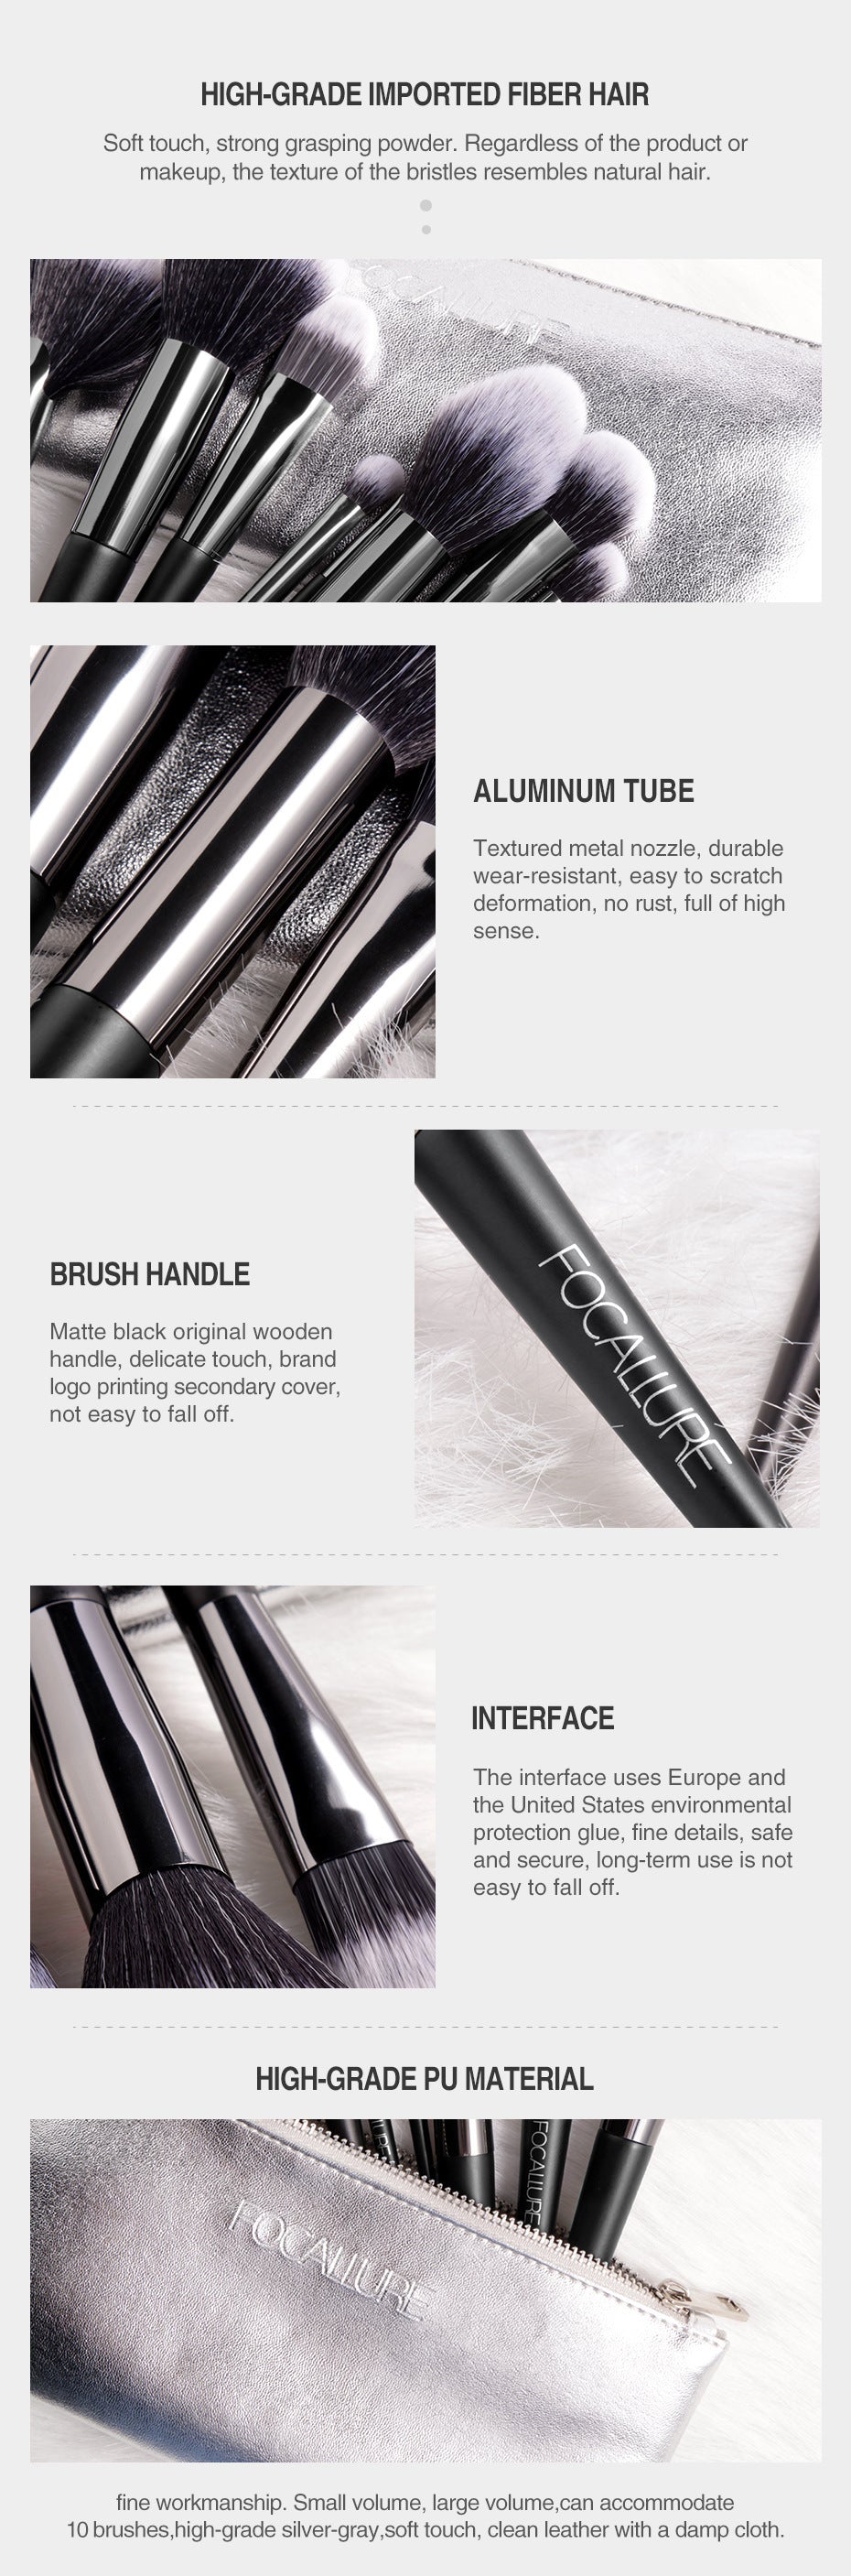 Makeup Brush Set Ten Pack Complete Set For Beginners Beauty Tools Powder Brush Eye Shadow Brush